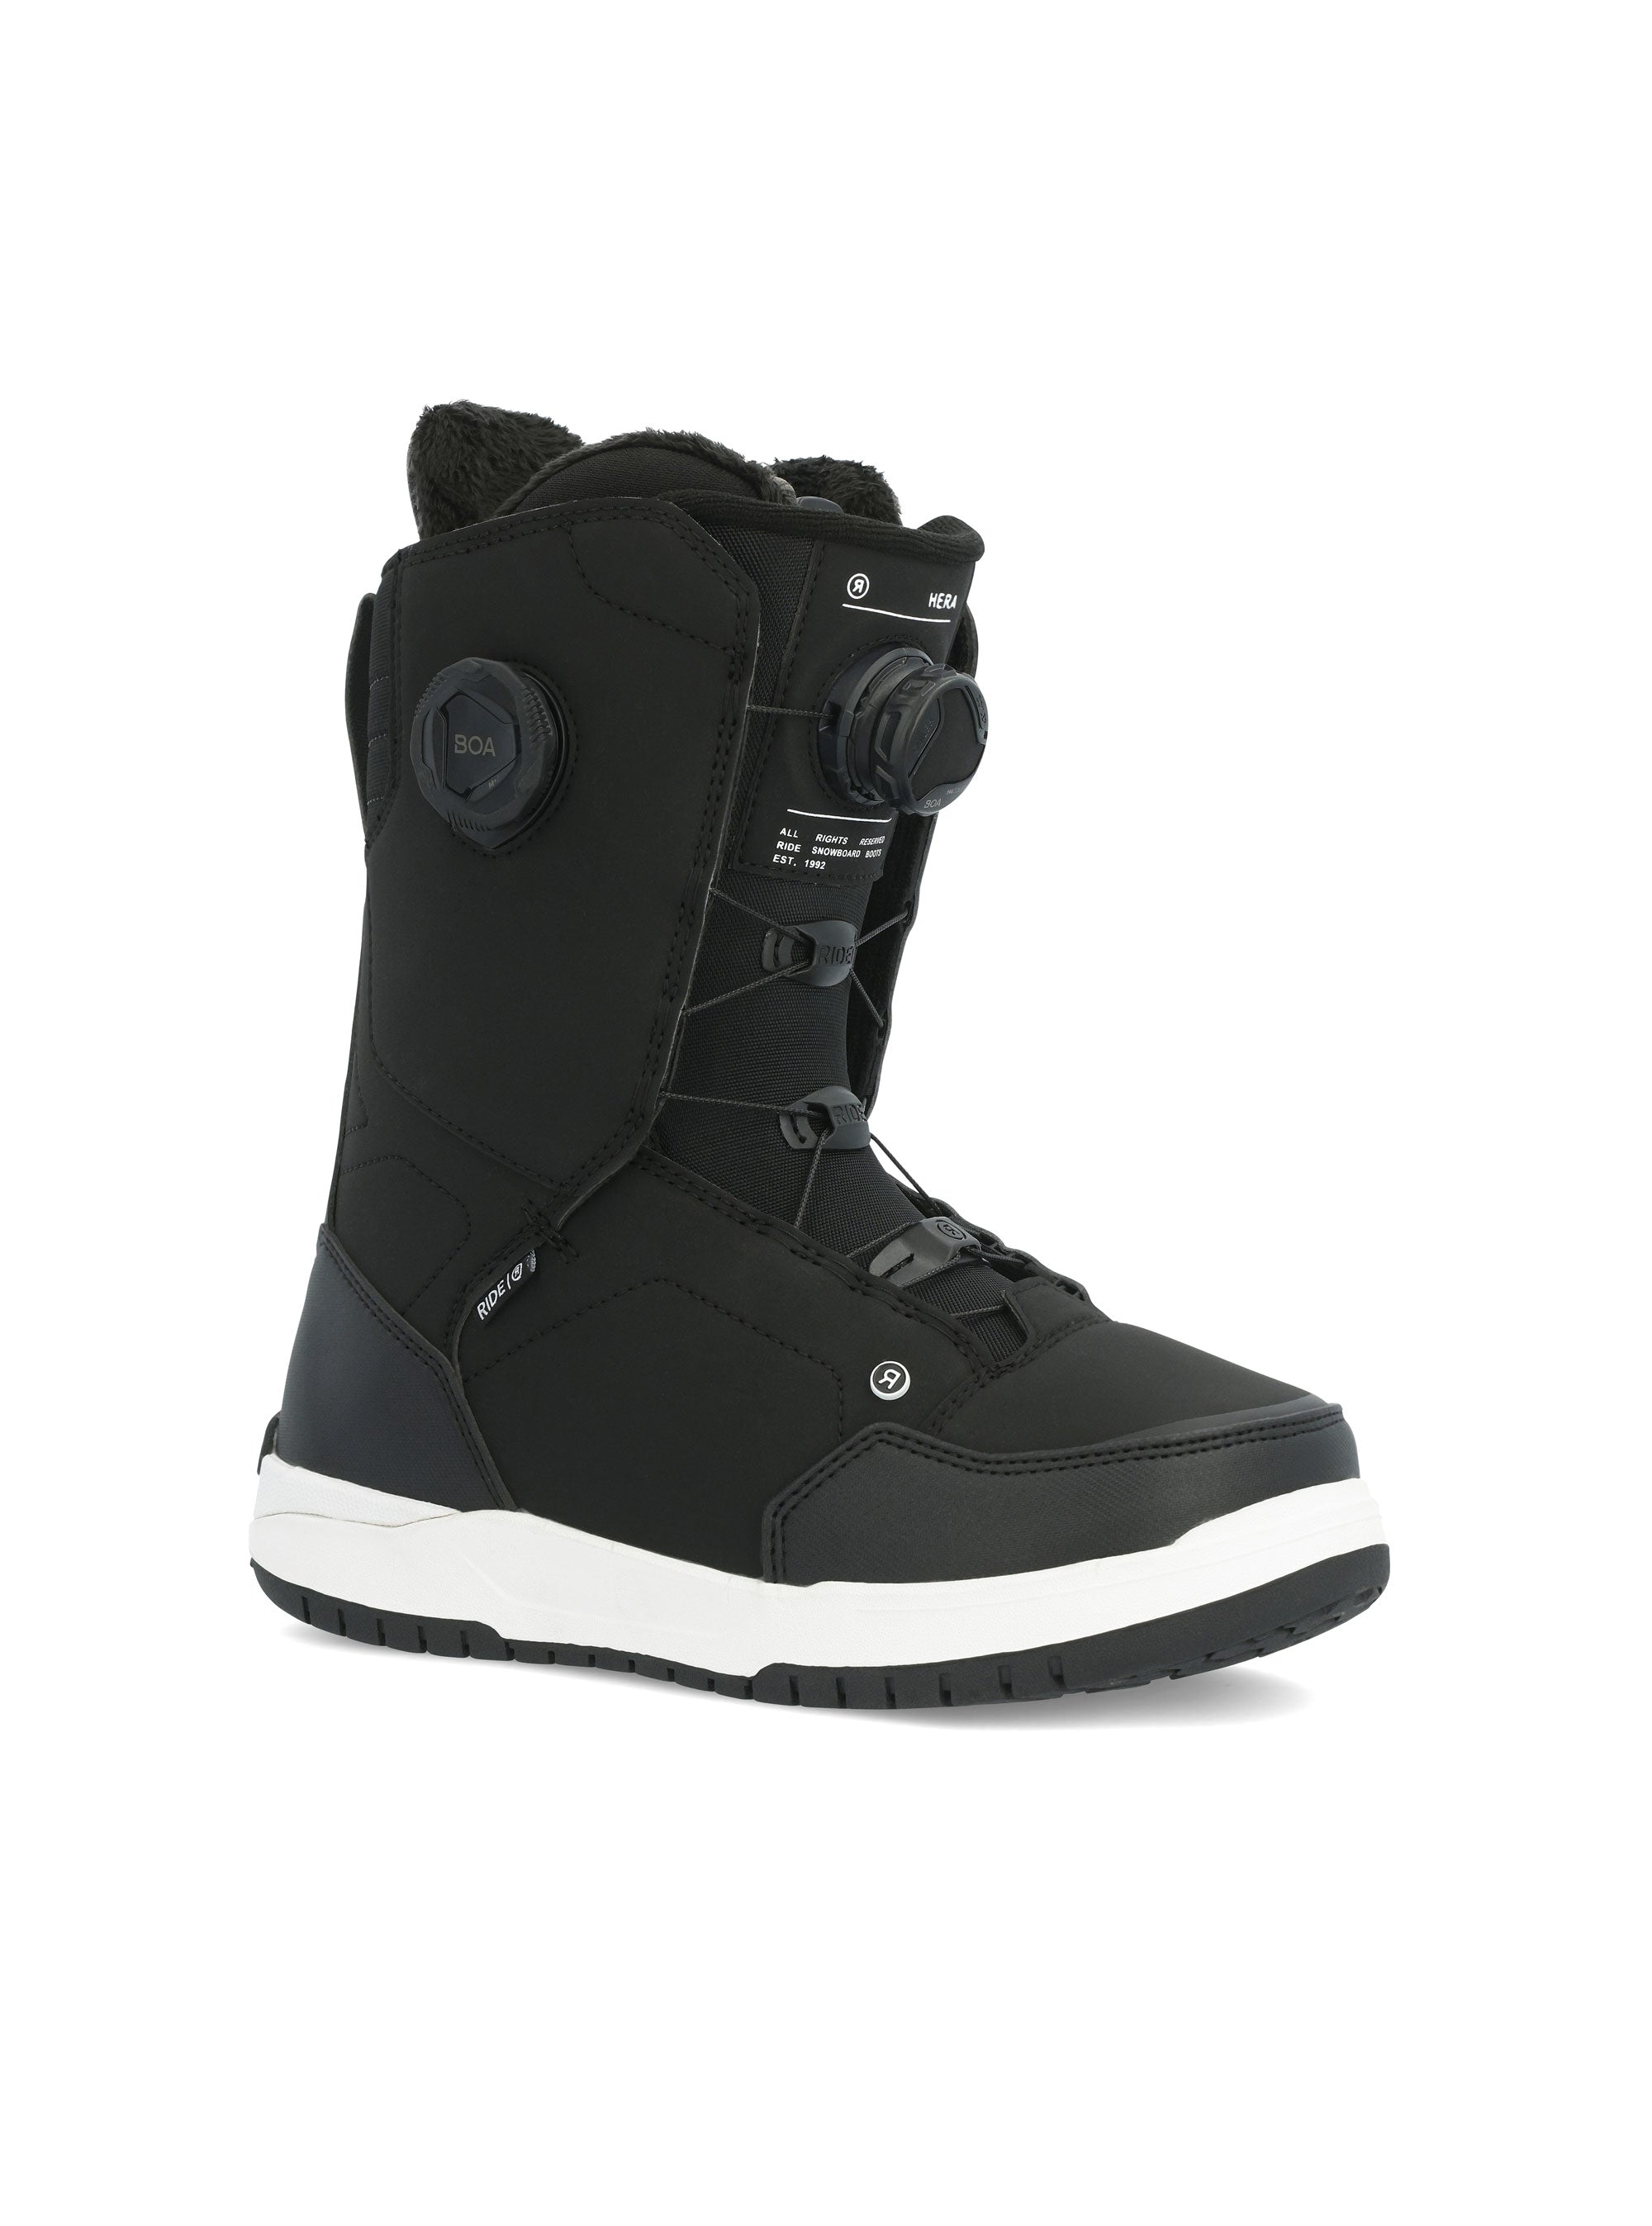 Hera Snowboard Boots